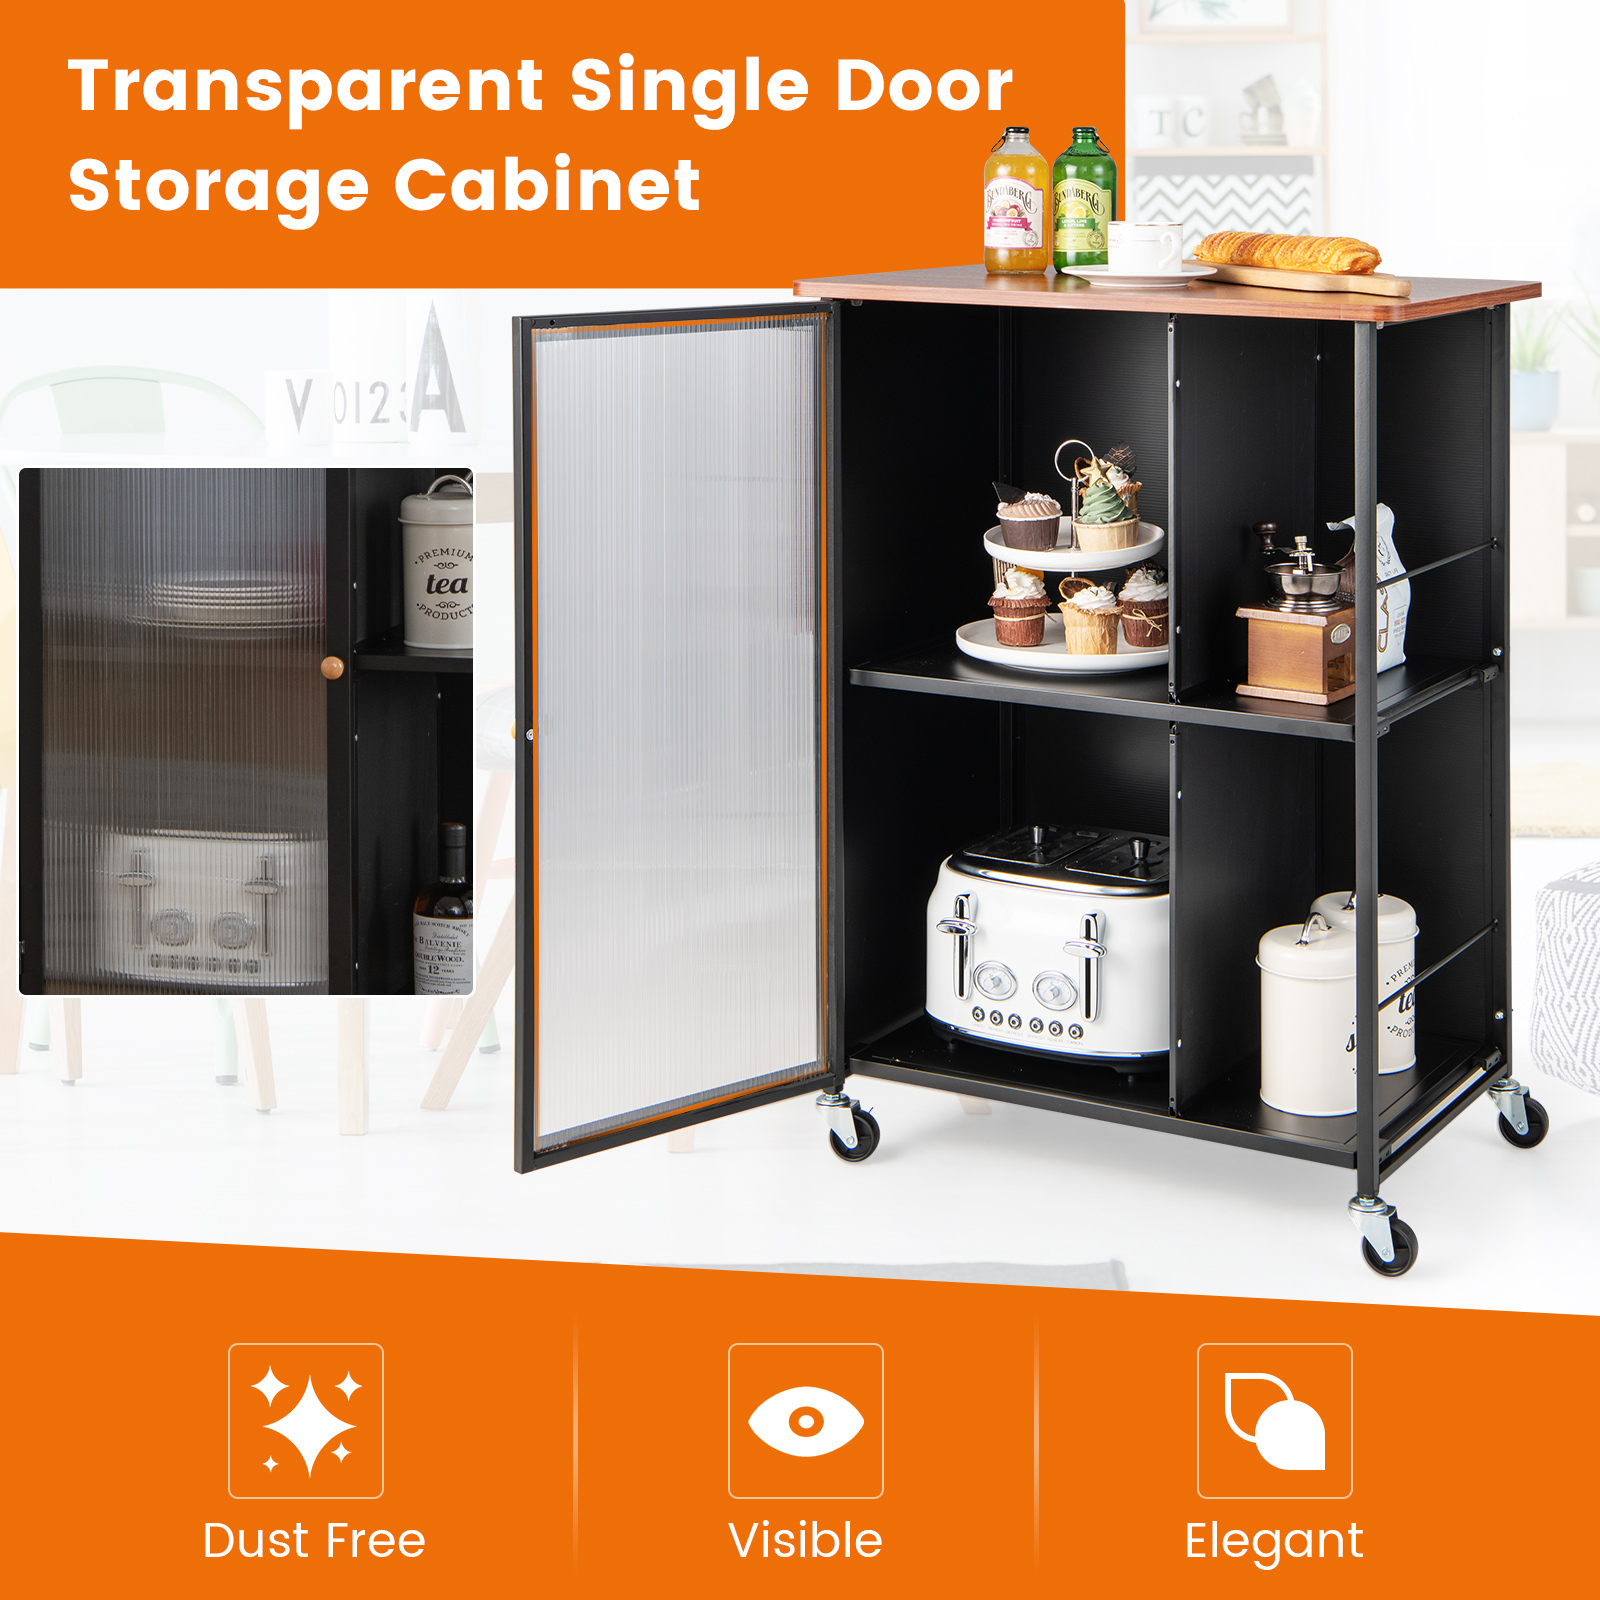 Mobile_Serving_Cart_with_Transparent_Single_Door_Cabinet-3.jpg